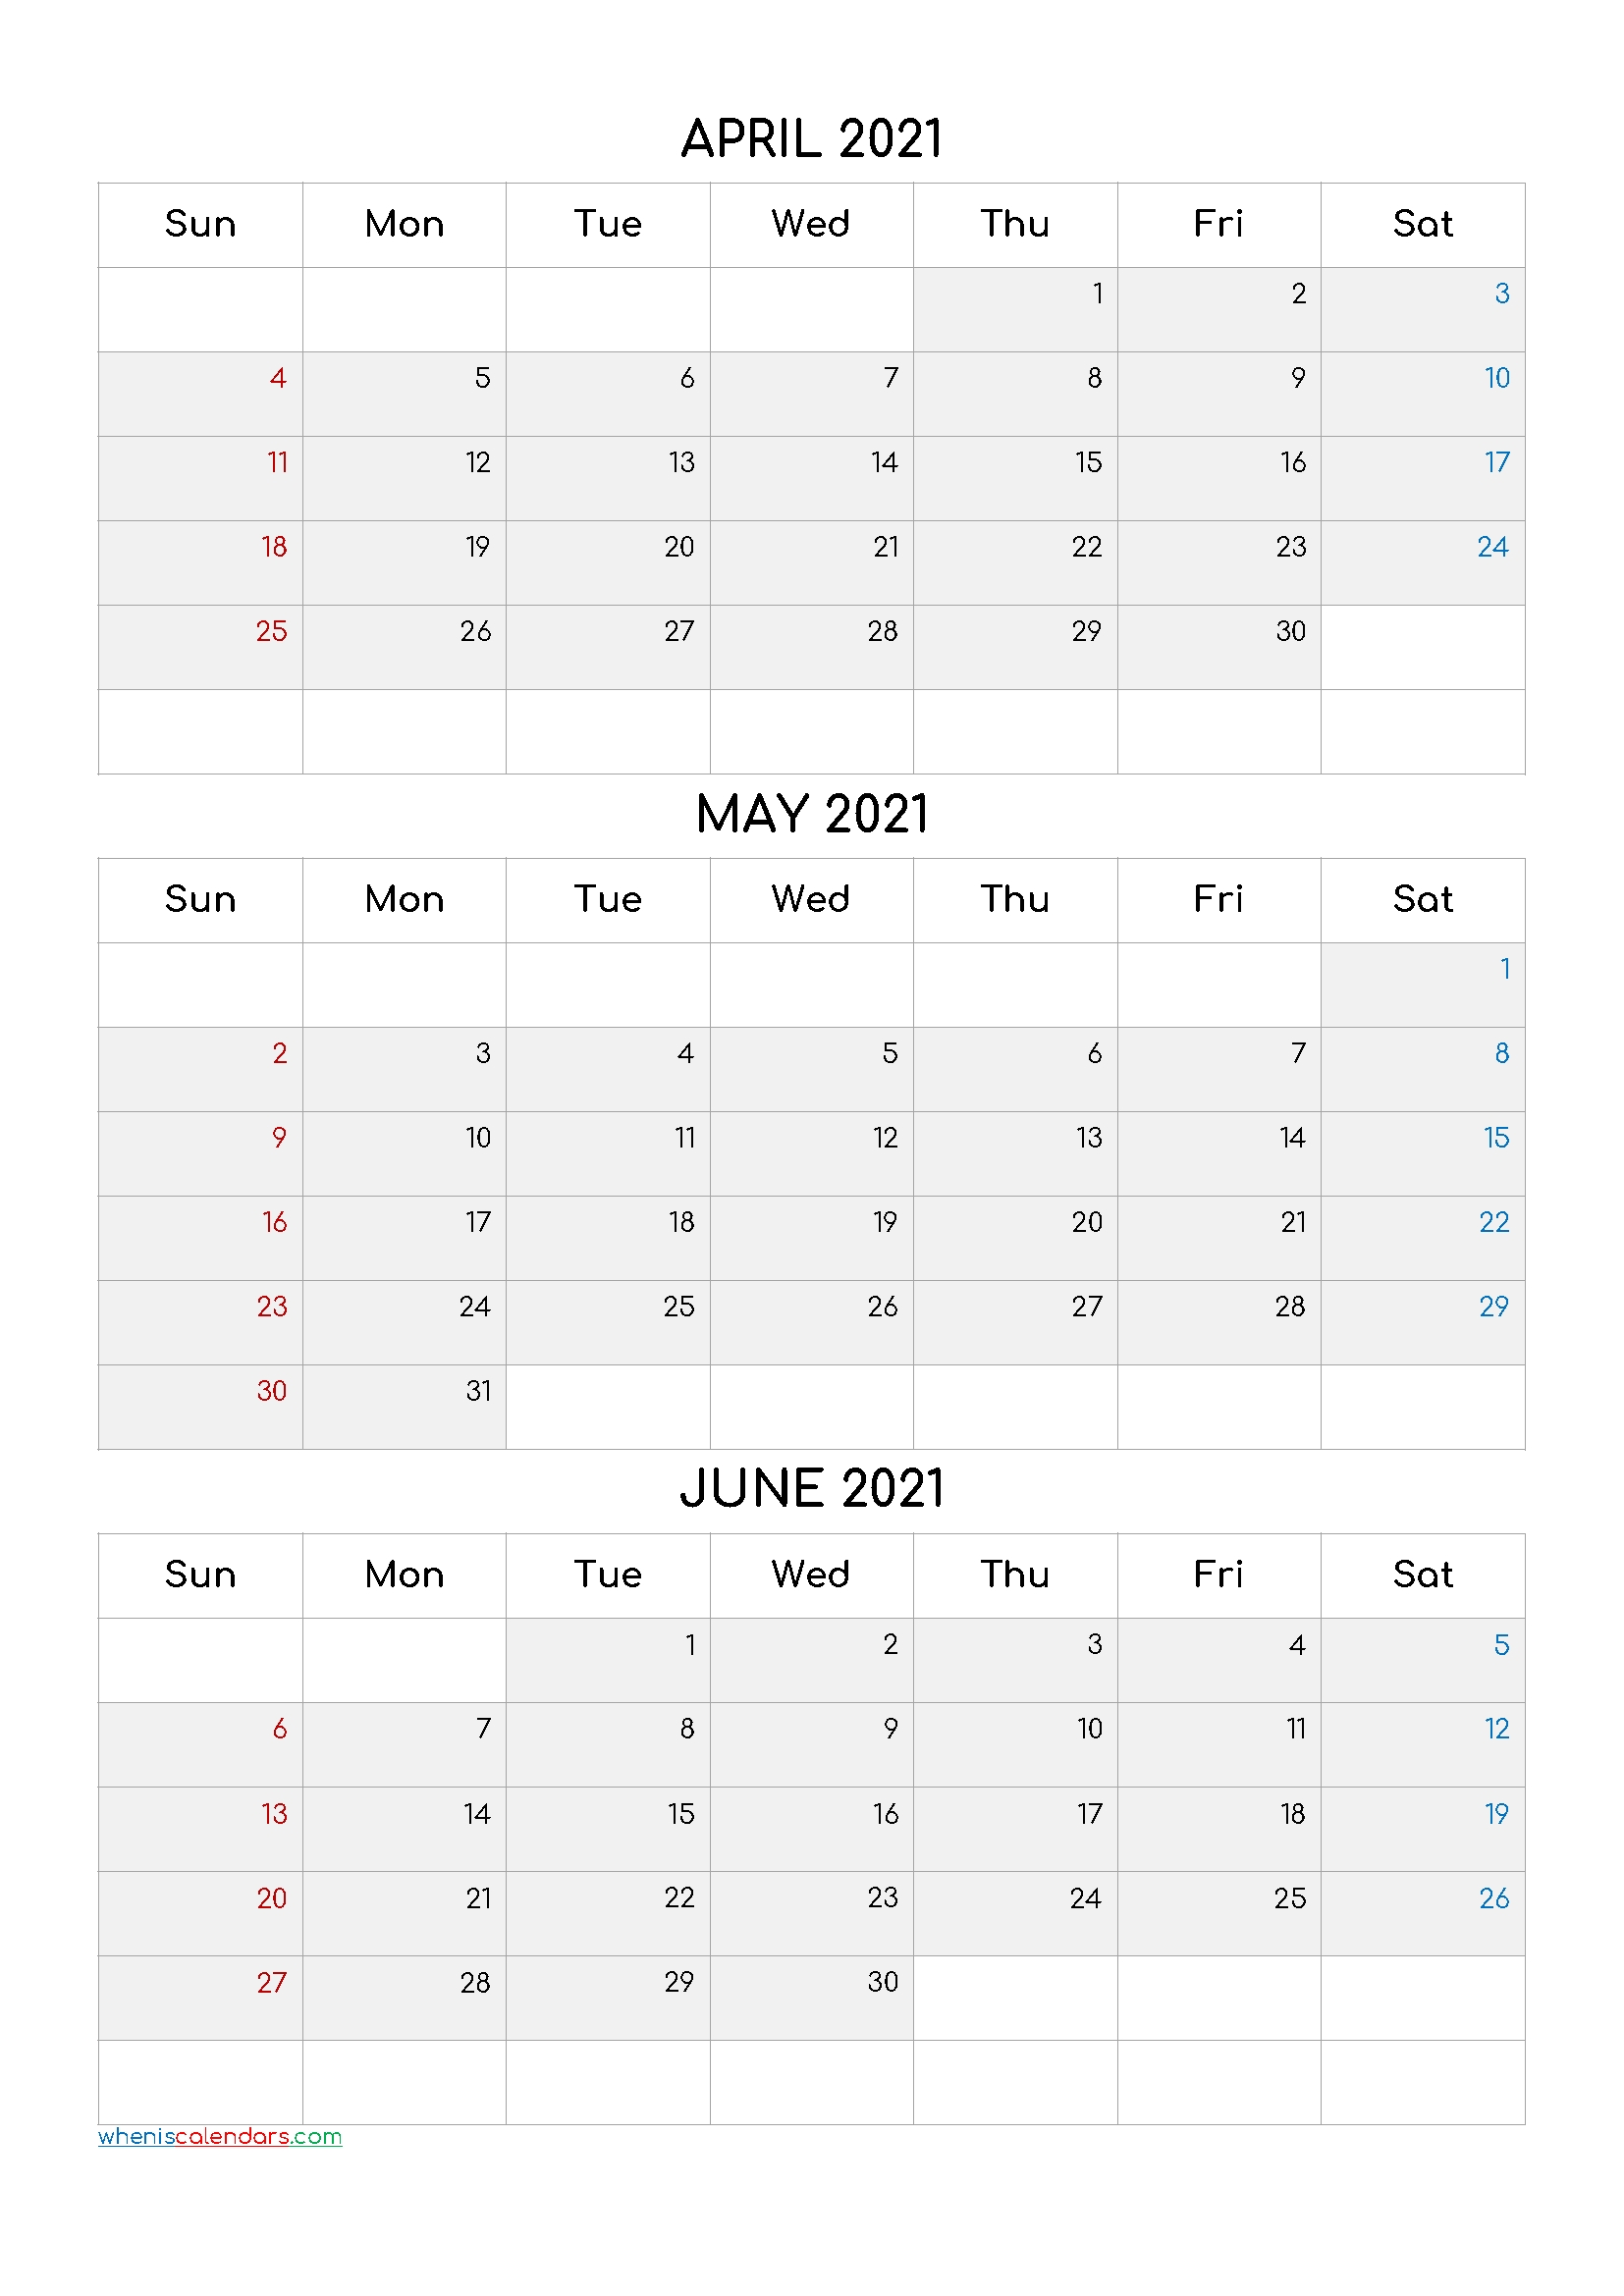 Free January February March 2021 Calendar - Calendraex March April May June 2021 Calendar